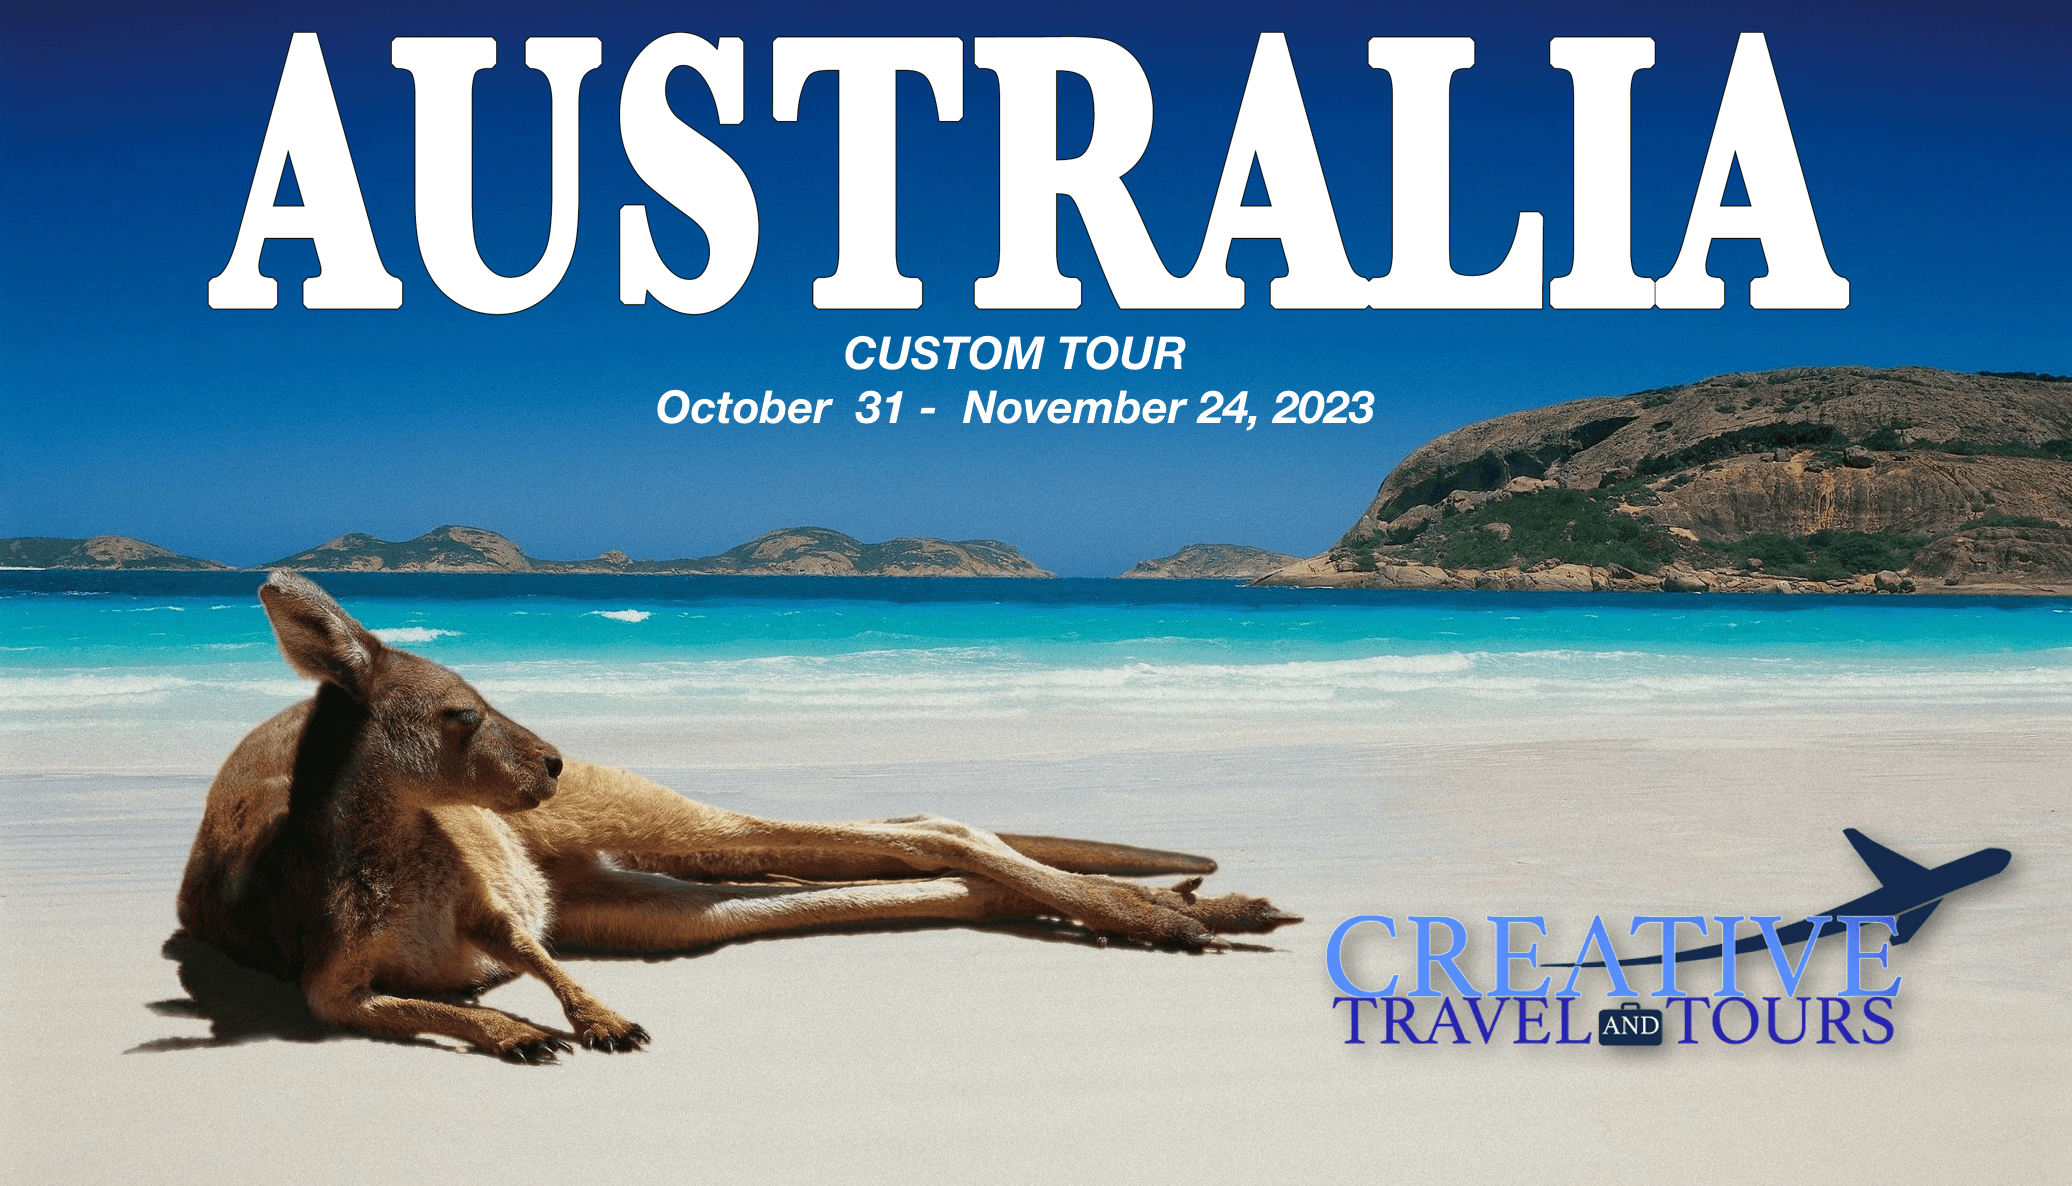 Australia Custom tour presentation - background banner